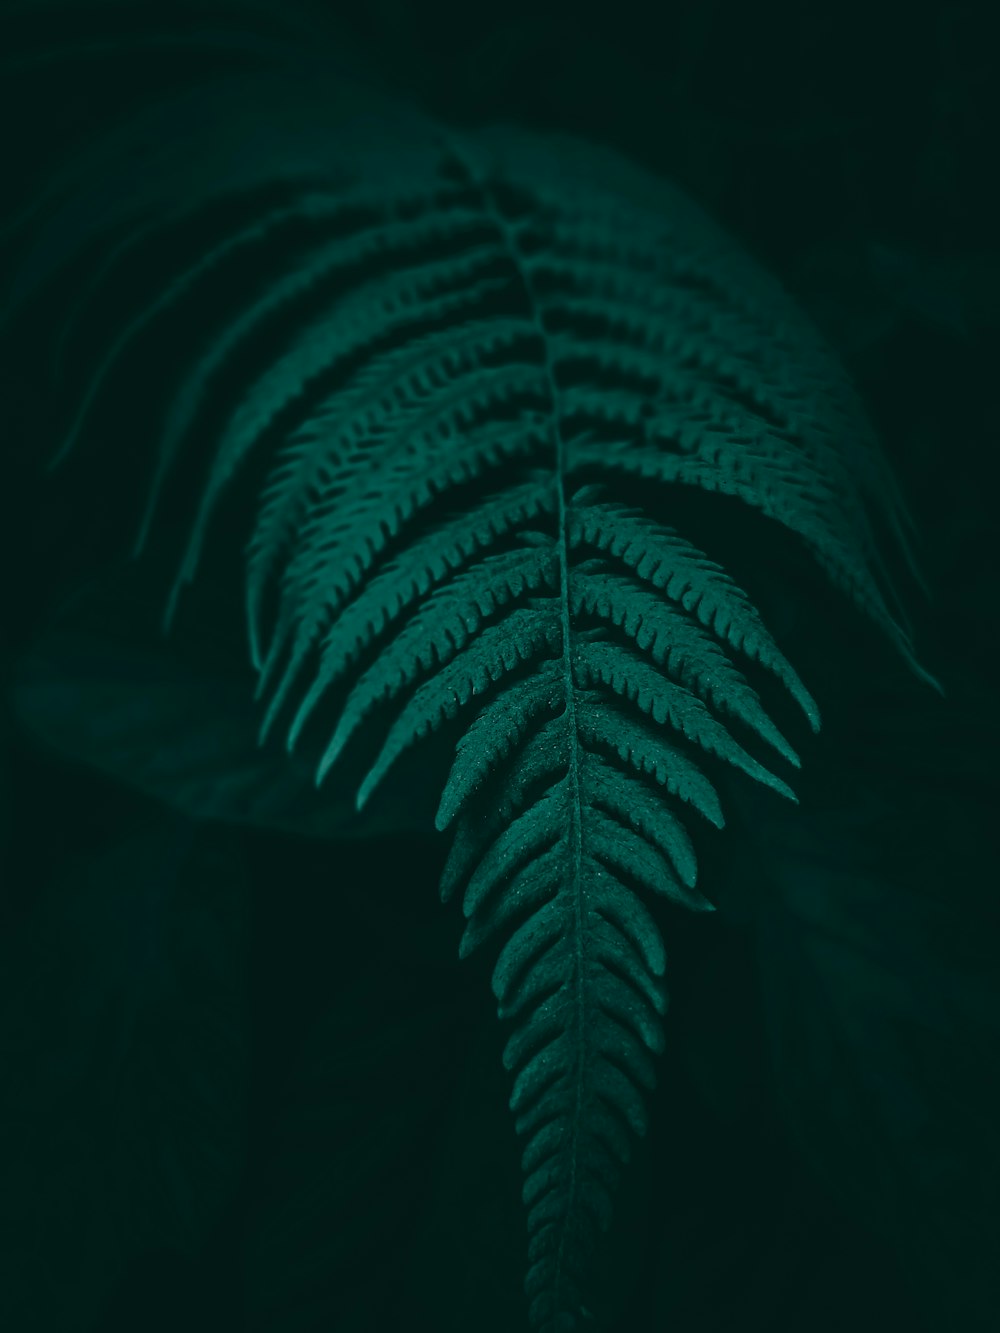 Grüne Blattpflanze im dunklen Raum